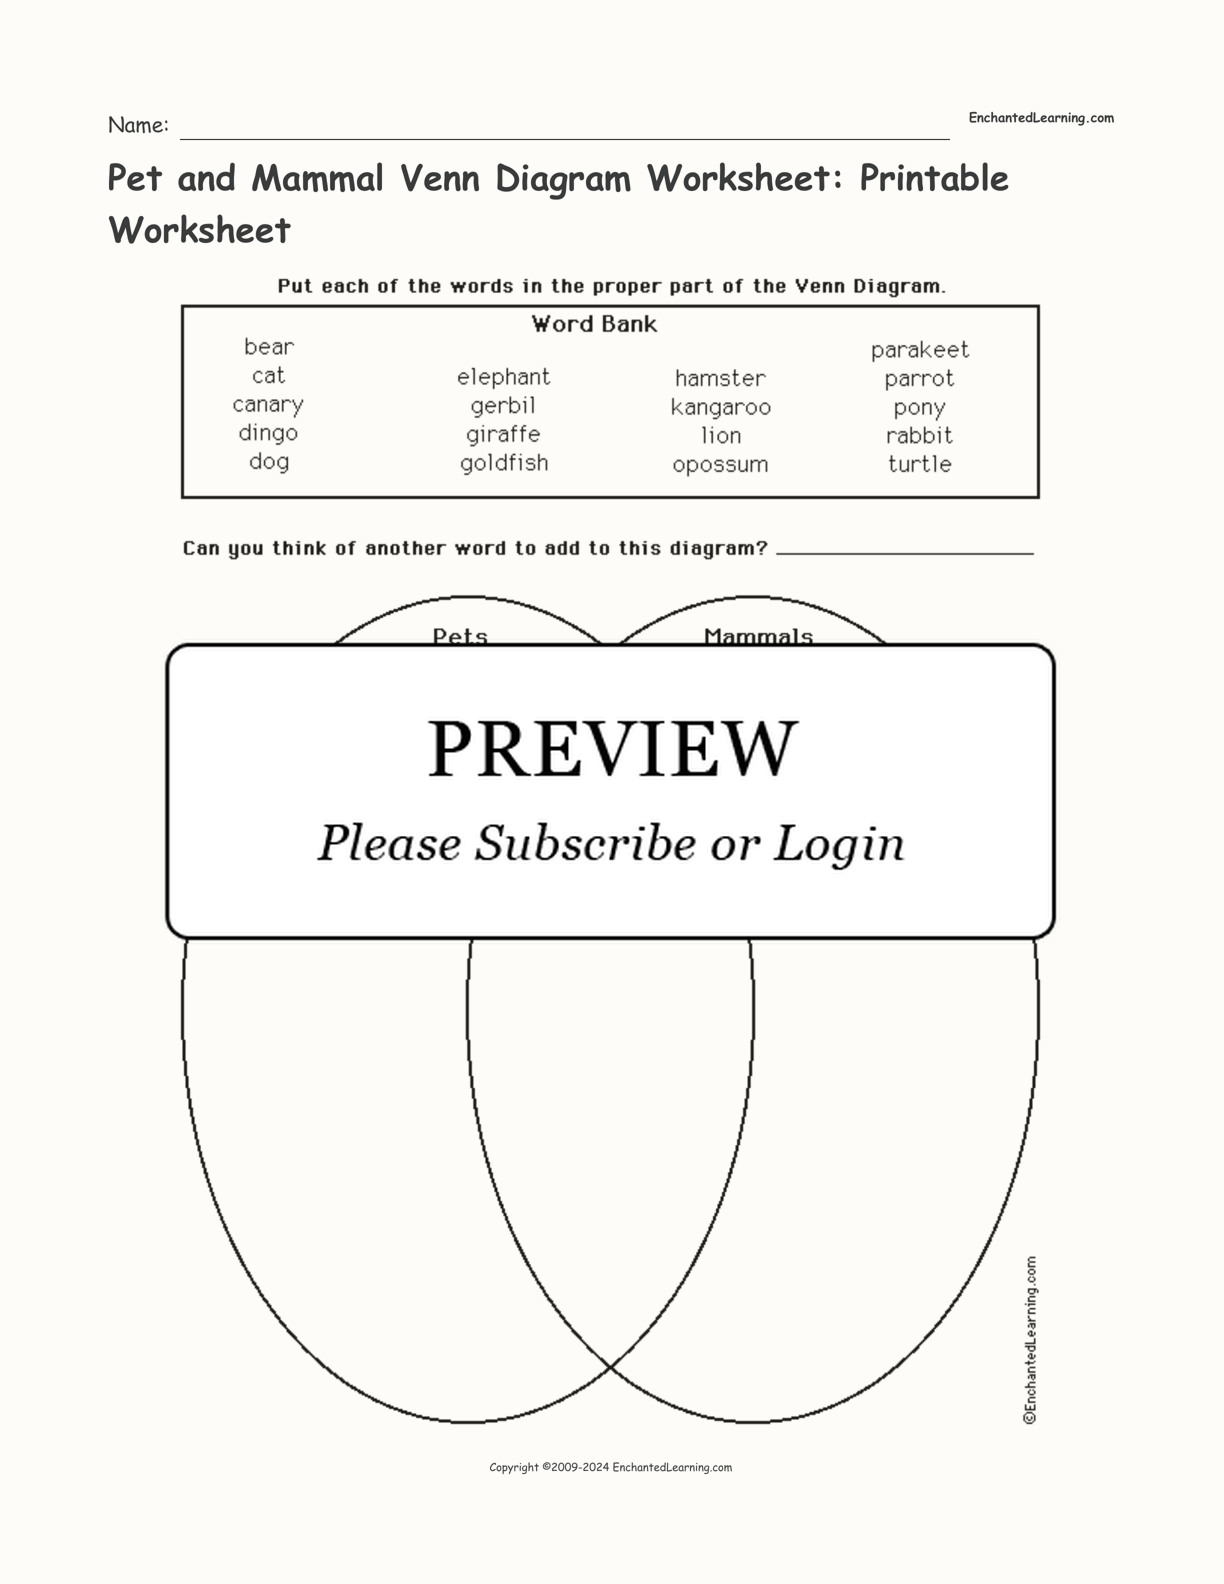 Pet and Mammal Venn Diagram Worksheet: Printable Worksheet interactive worksheet page 1